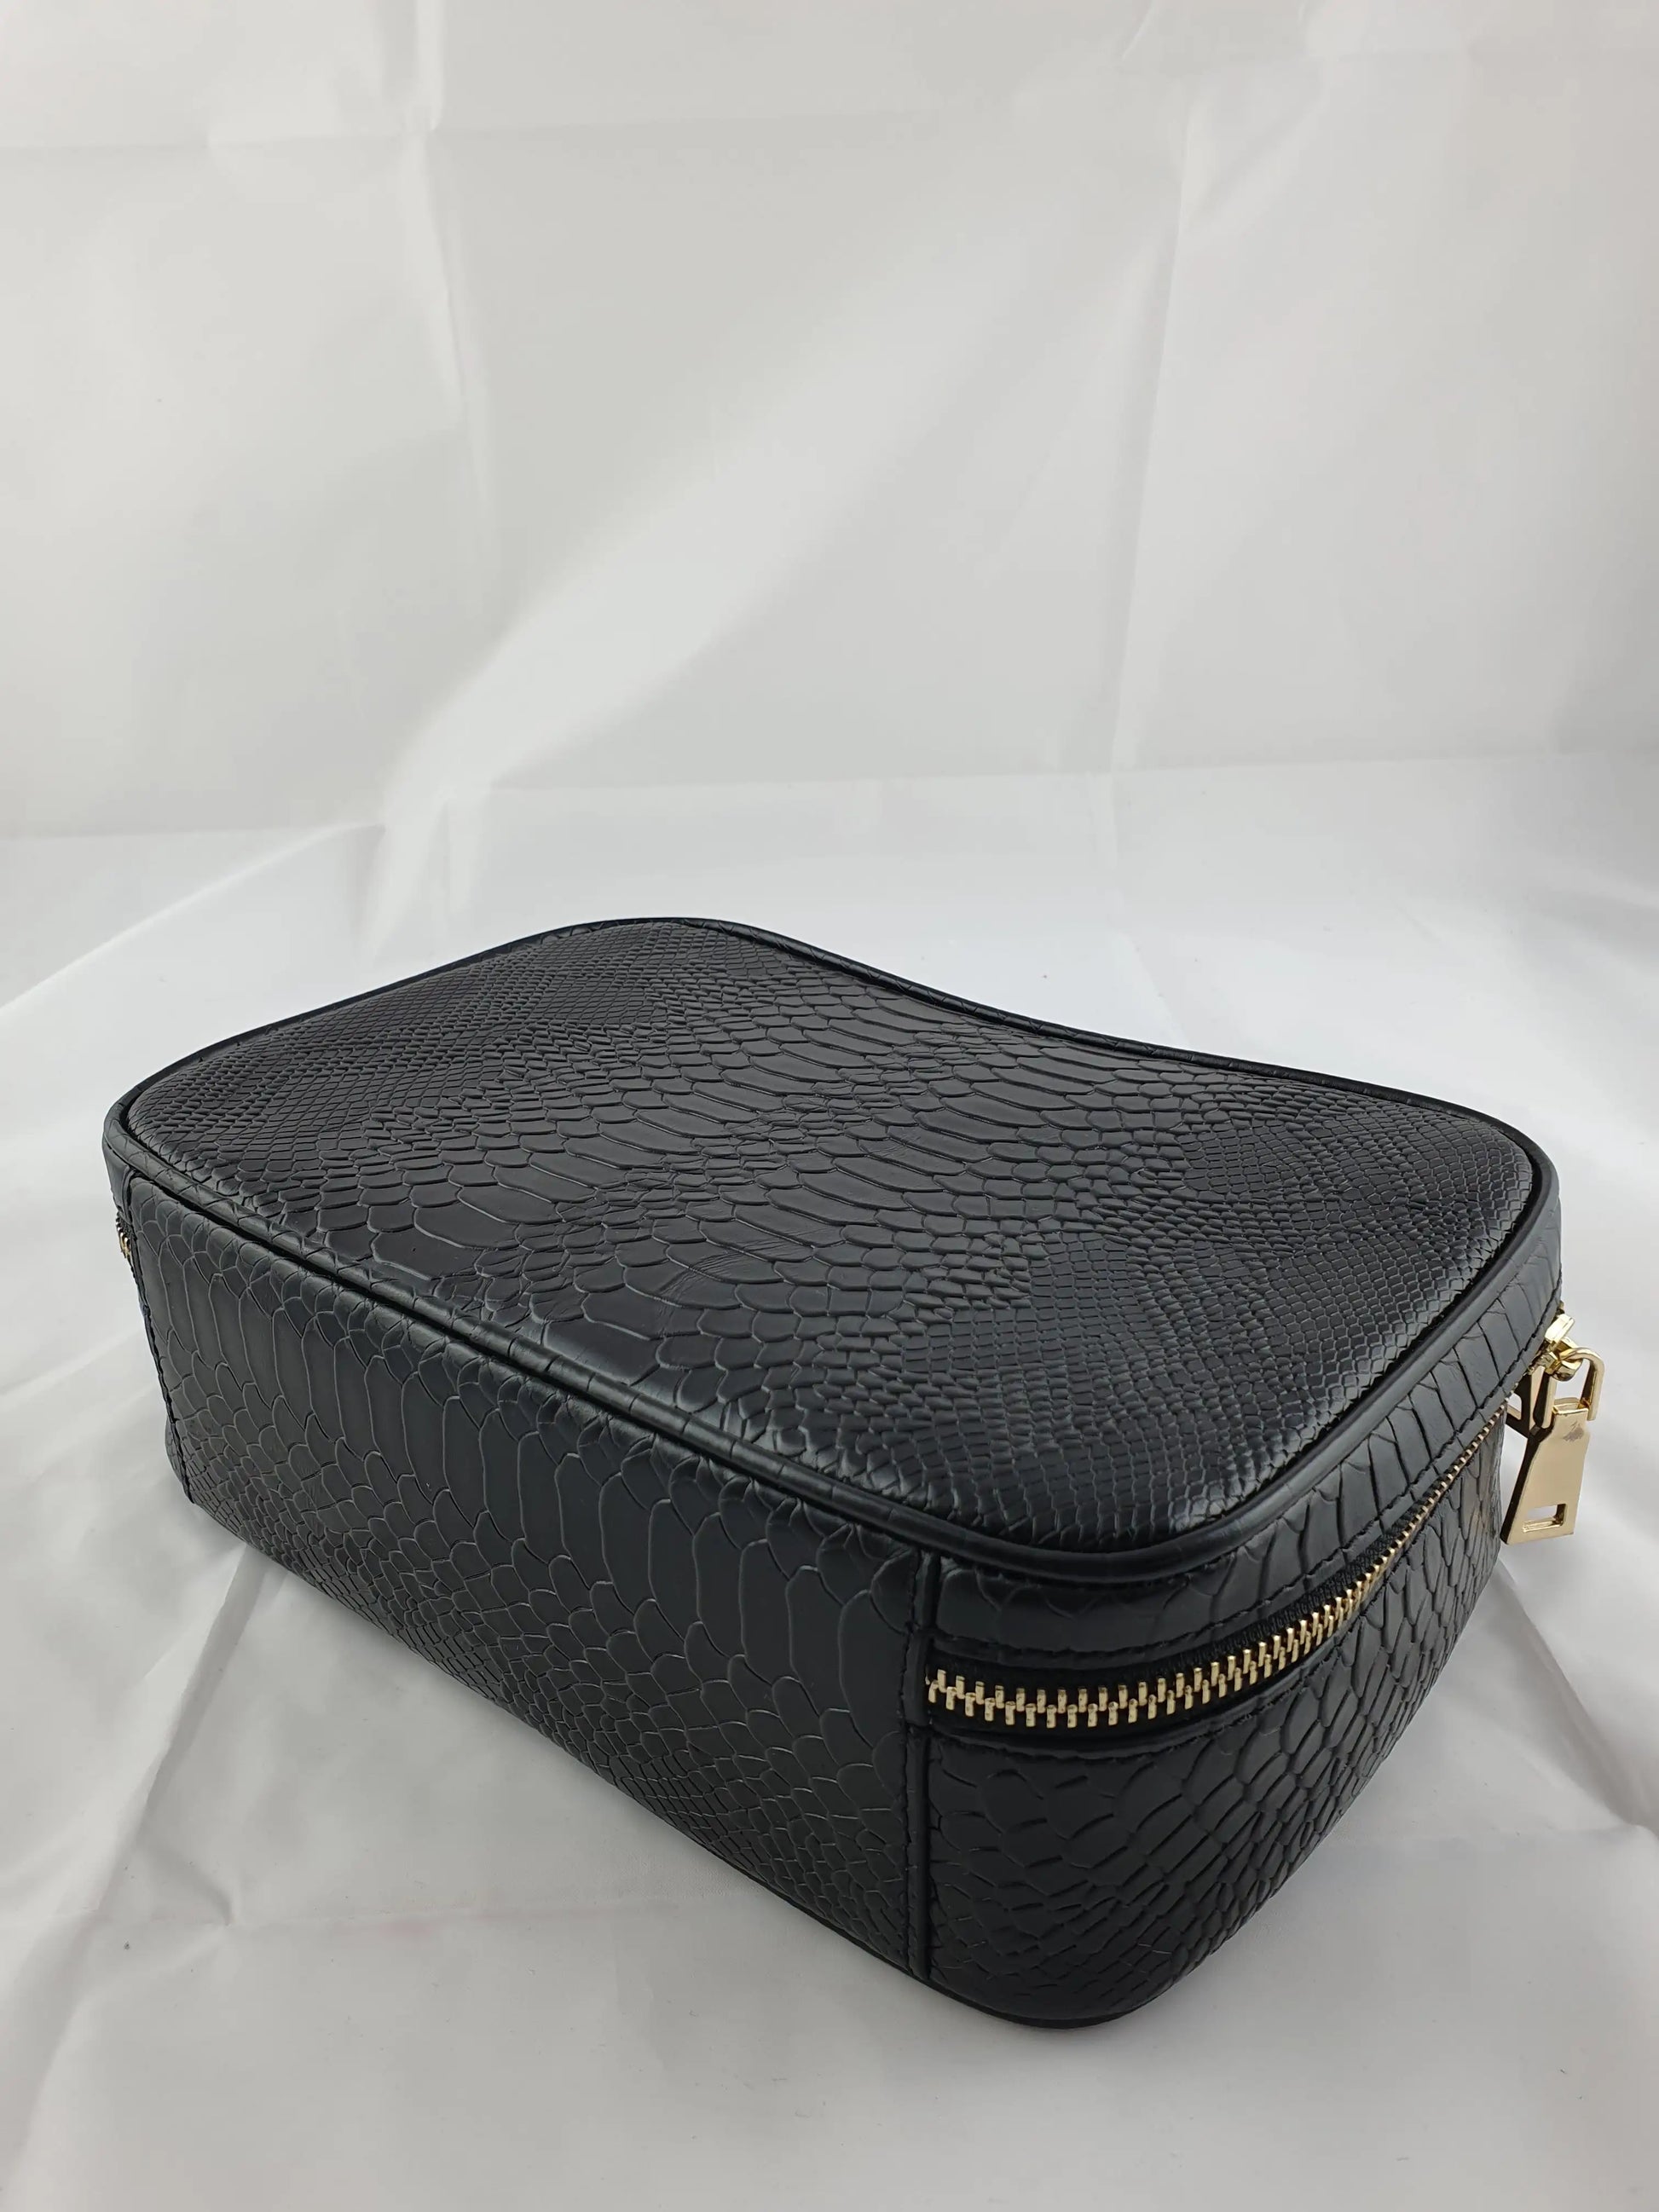 Mon Purse Square Snakeskin Pattern Handbag by SwapUp-Second Hand Shop-Thrift Store-Op Shop 